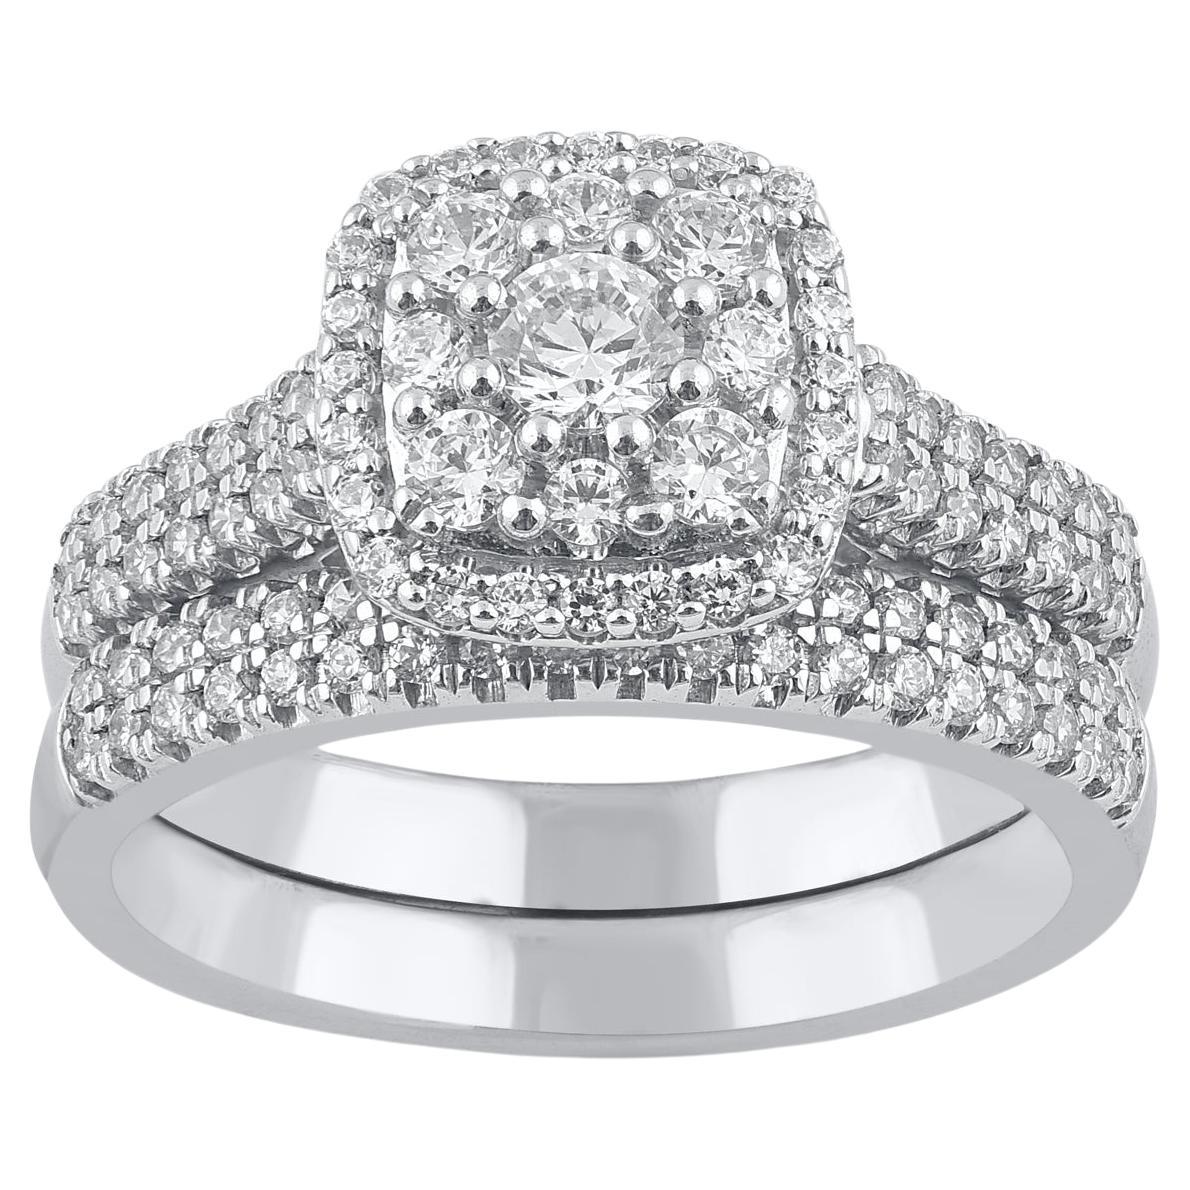 TJD 1.0 Carat Brilliant Cut Diamond 14K White Gold Cushion Frame Bridal Ring Set For Sale